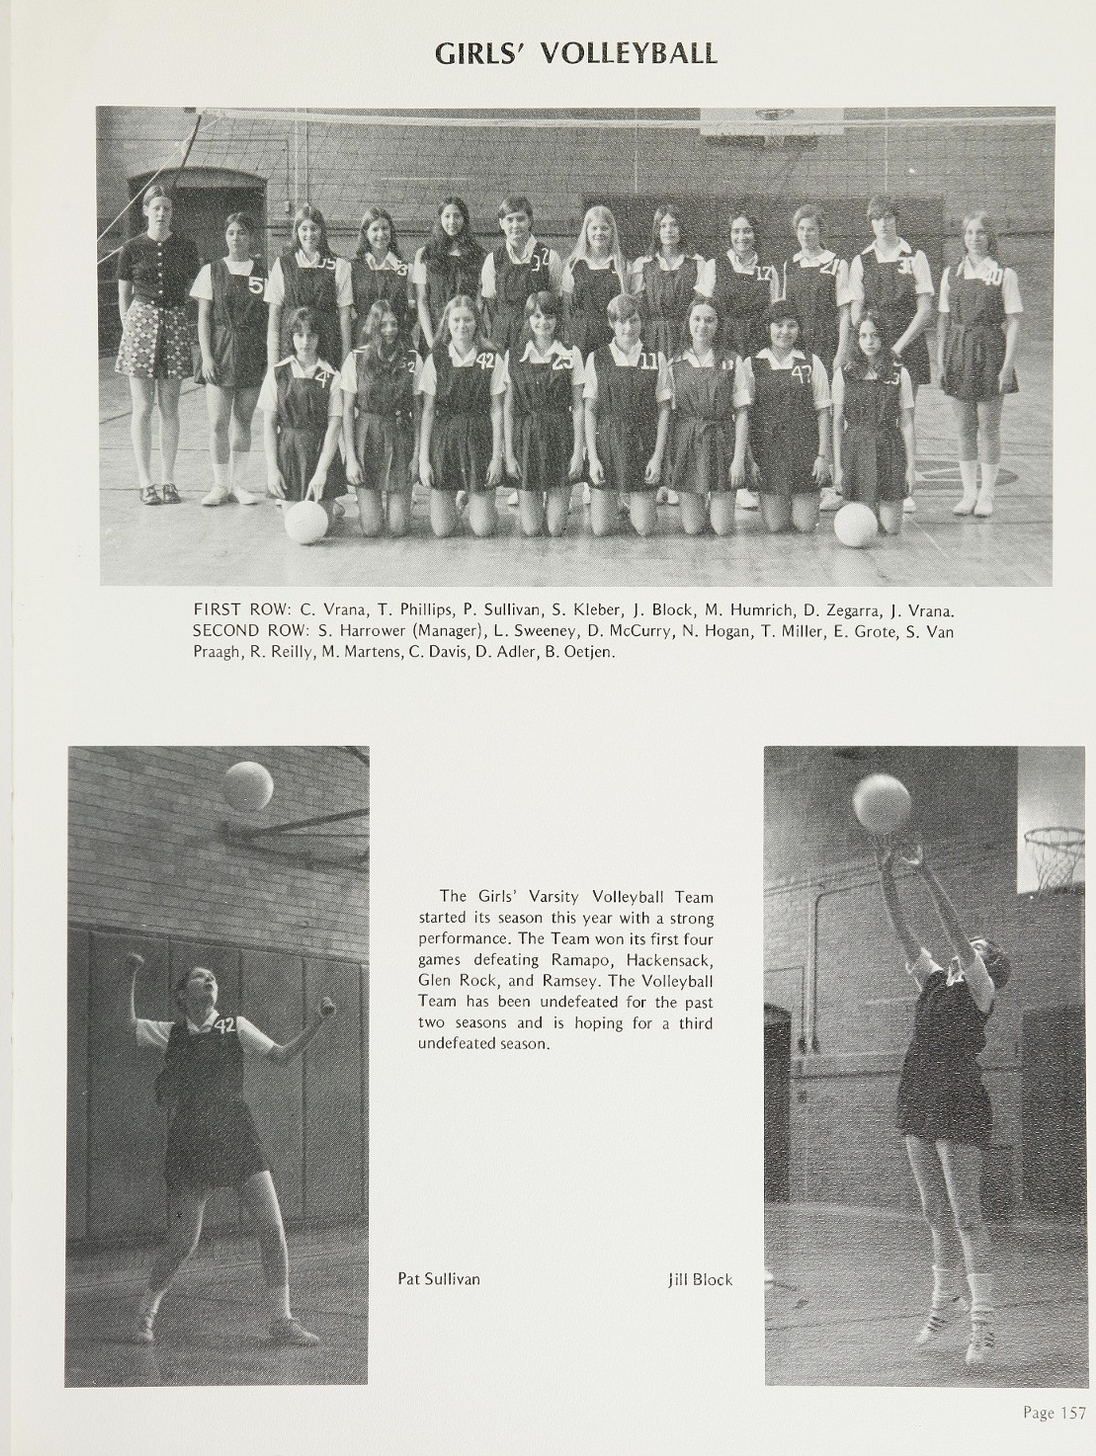 1972 Girls’ Volleyball Team